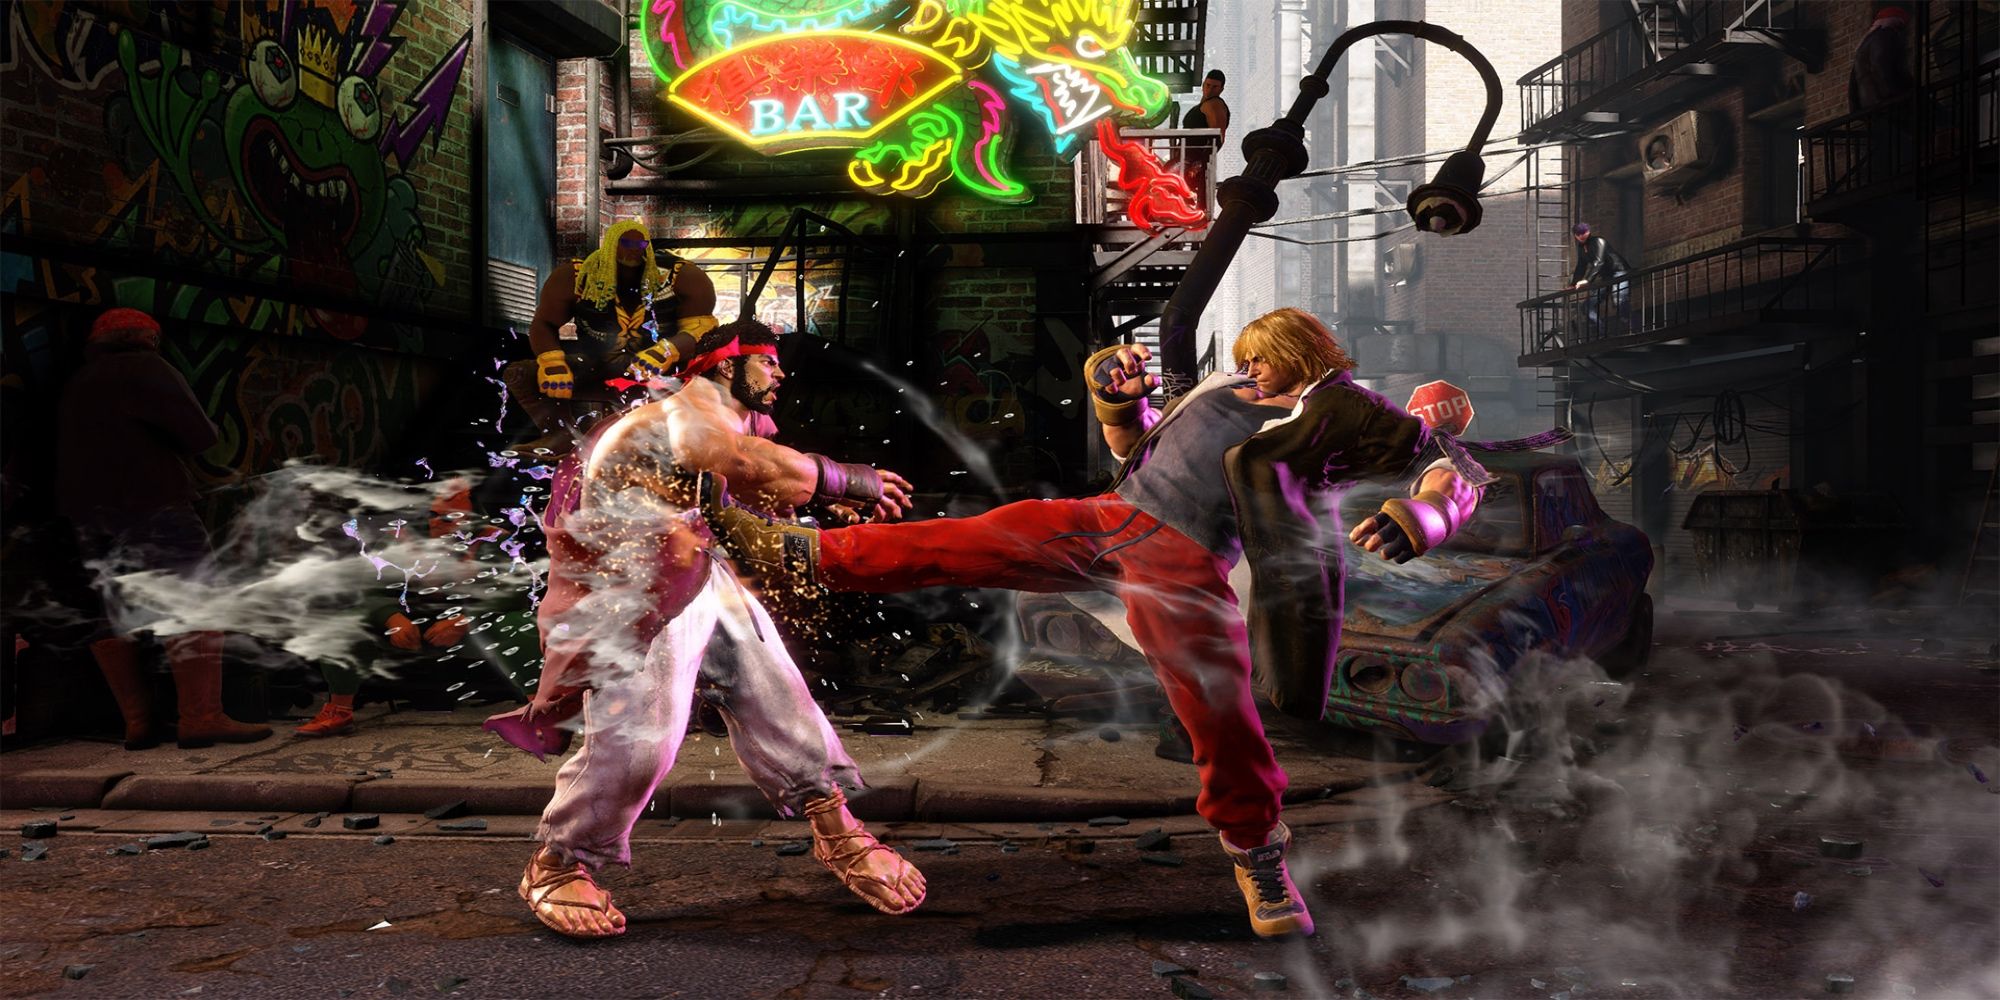 Ken kicks Ryu to drain his health